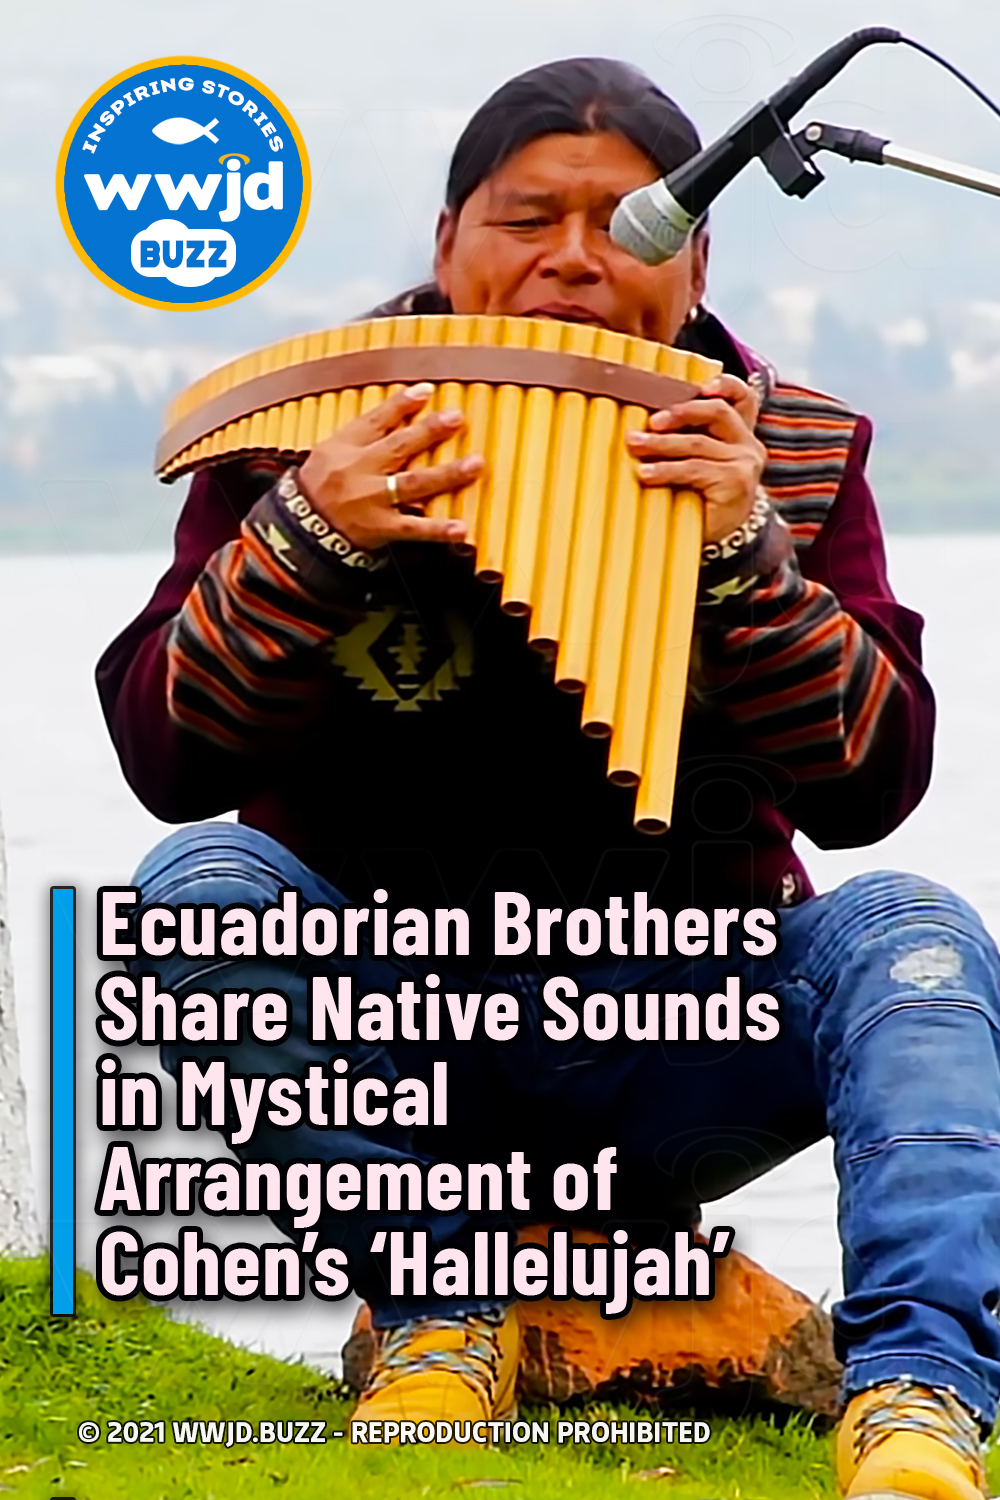 Ecuadorian Brothers Share Native Sounds in Mystical Arrangement of Cohen’s ‘Hallelujah’